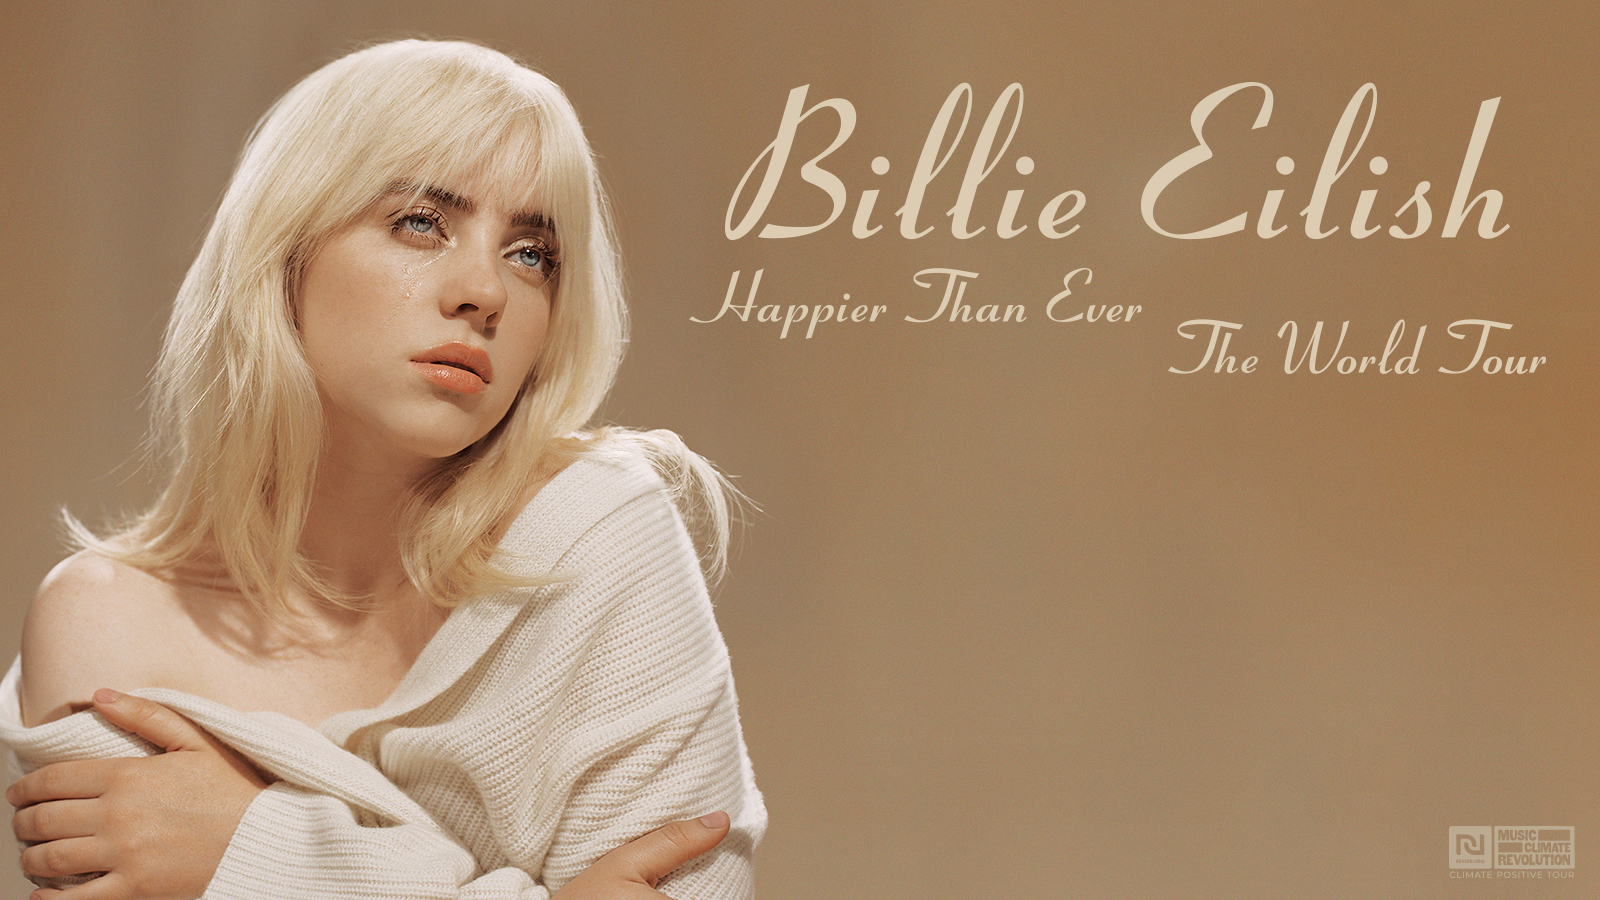 Concert Preview: Billie Ellish